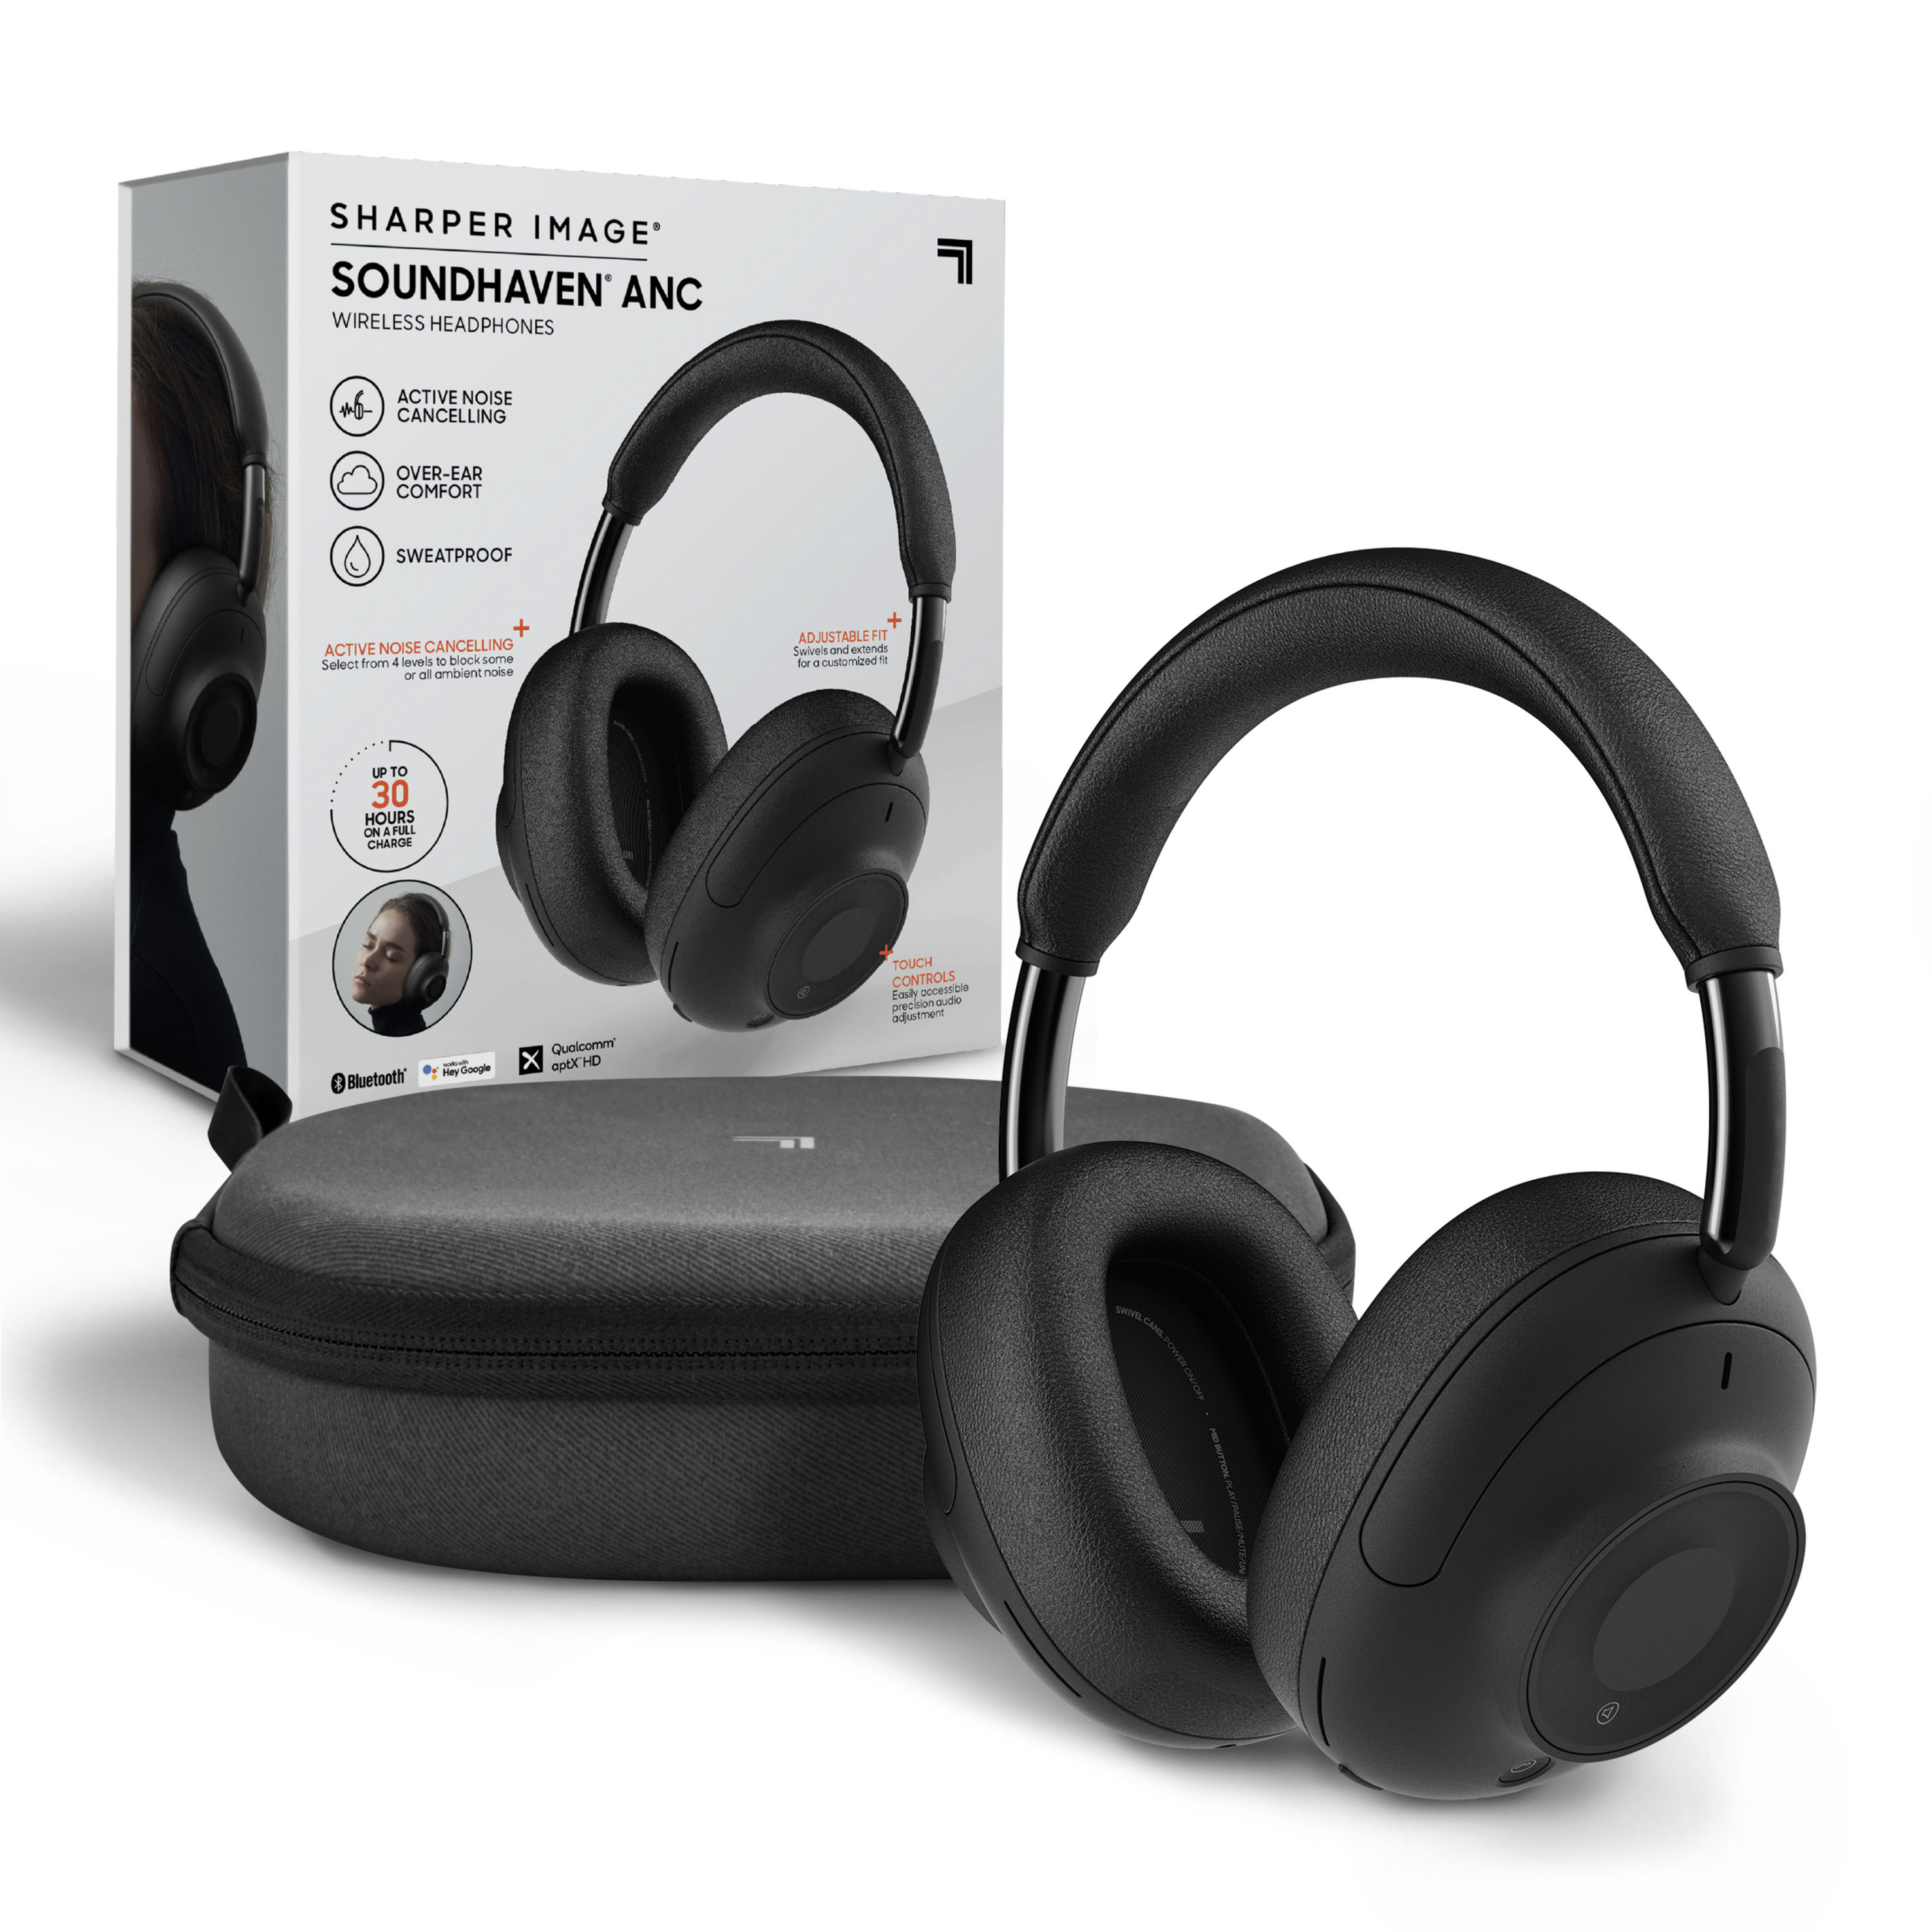 Earbud Wireless Noise Canceling Headphones in Black | - Sharper Image 1014697